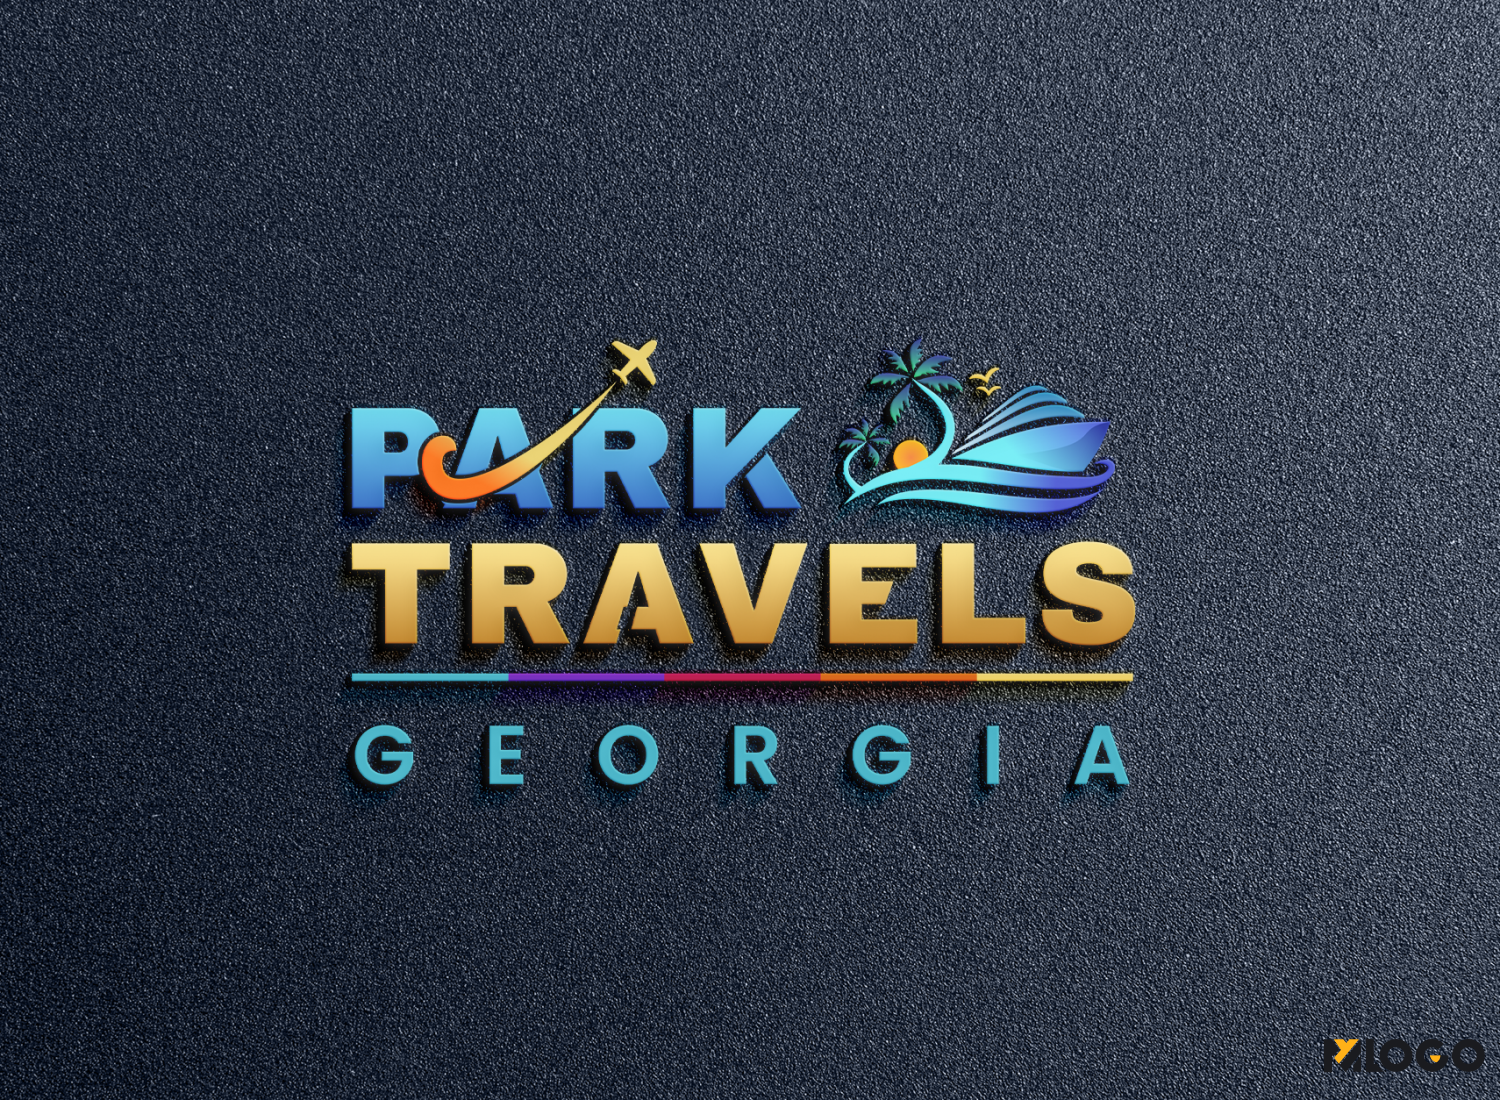 Park Travels Georgia